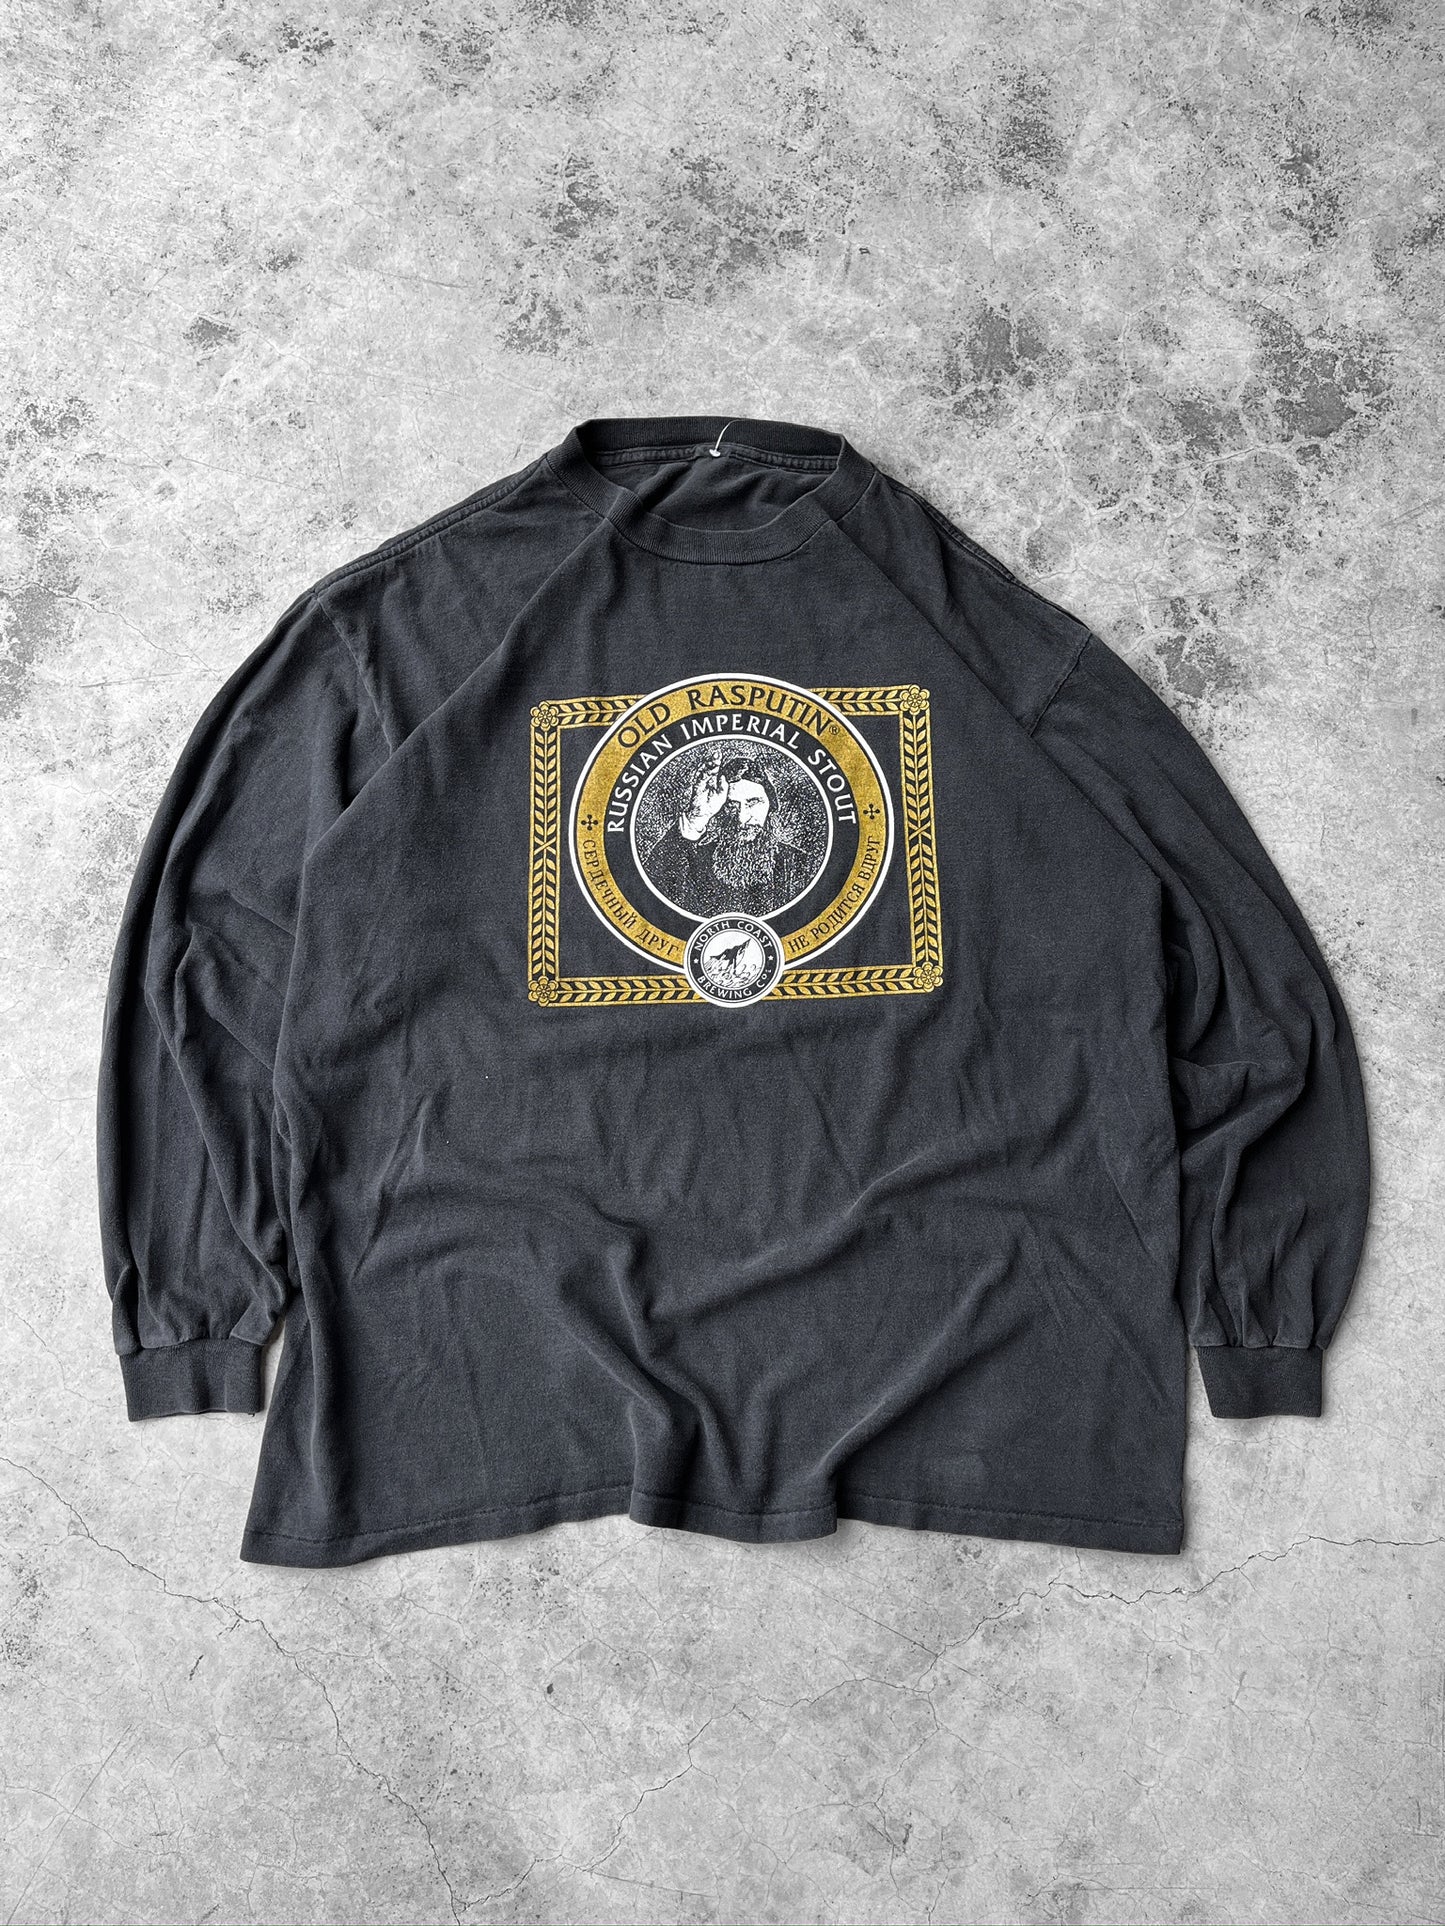 80’s Old Rasputin Long Sleeve Shirt - XL